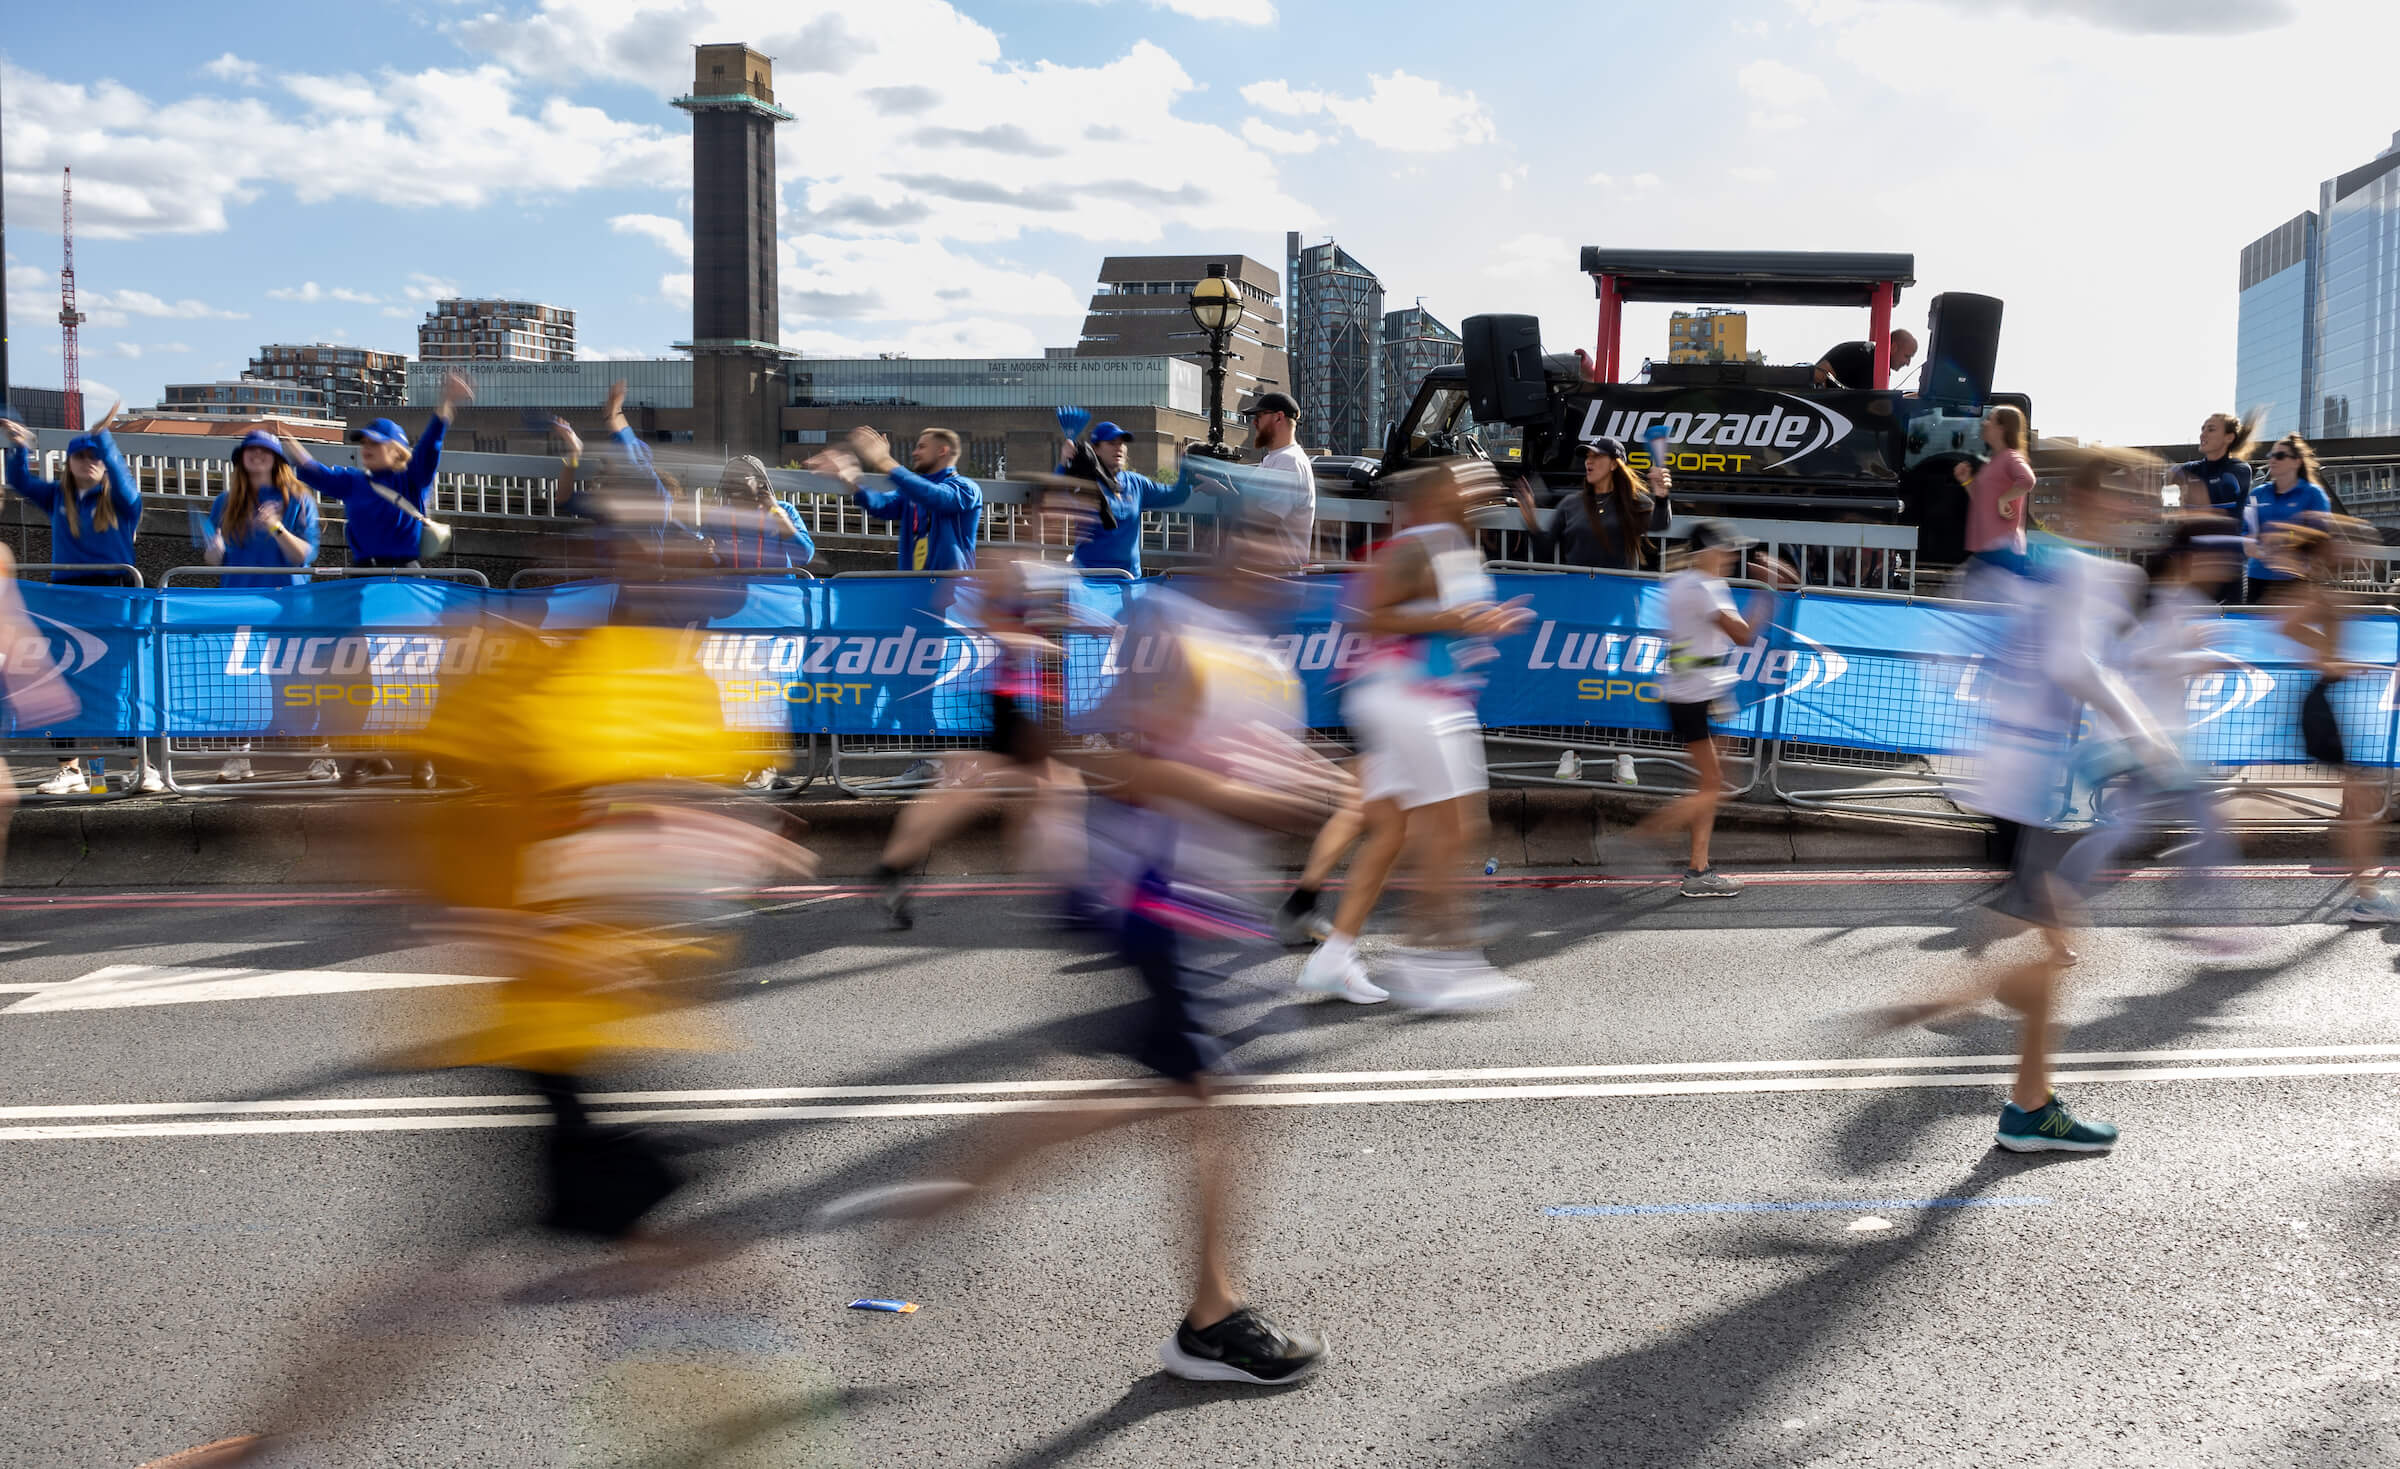 A blur of marathon runners passing a Lucozade Sport zone